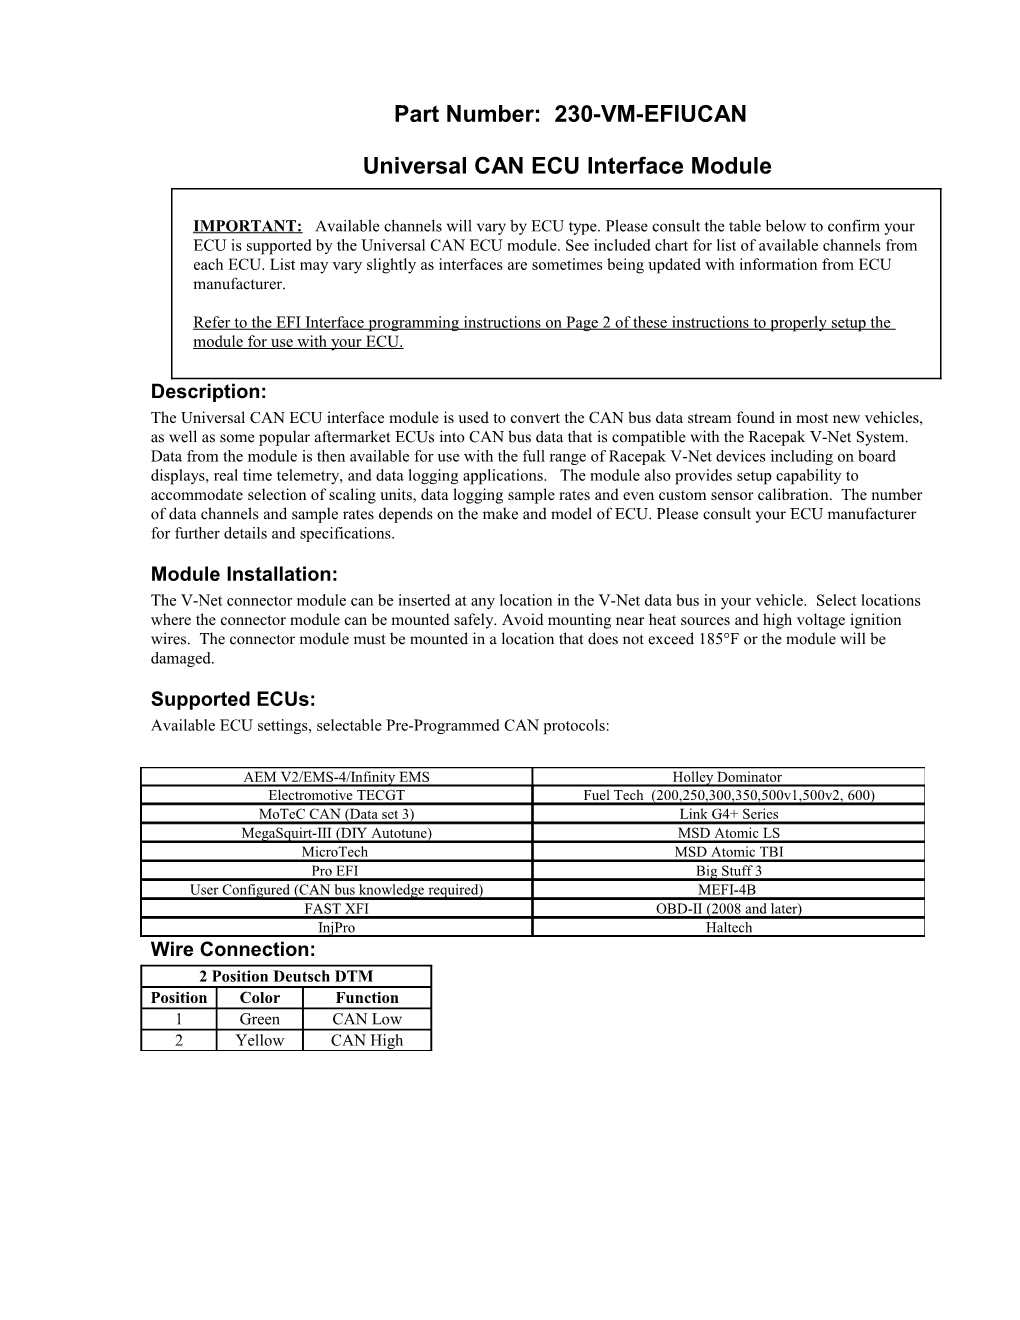 Universal CAN ECU Interface Module